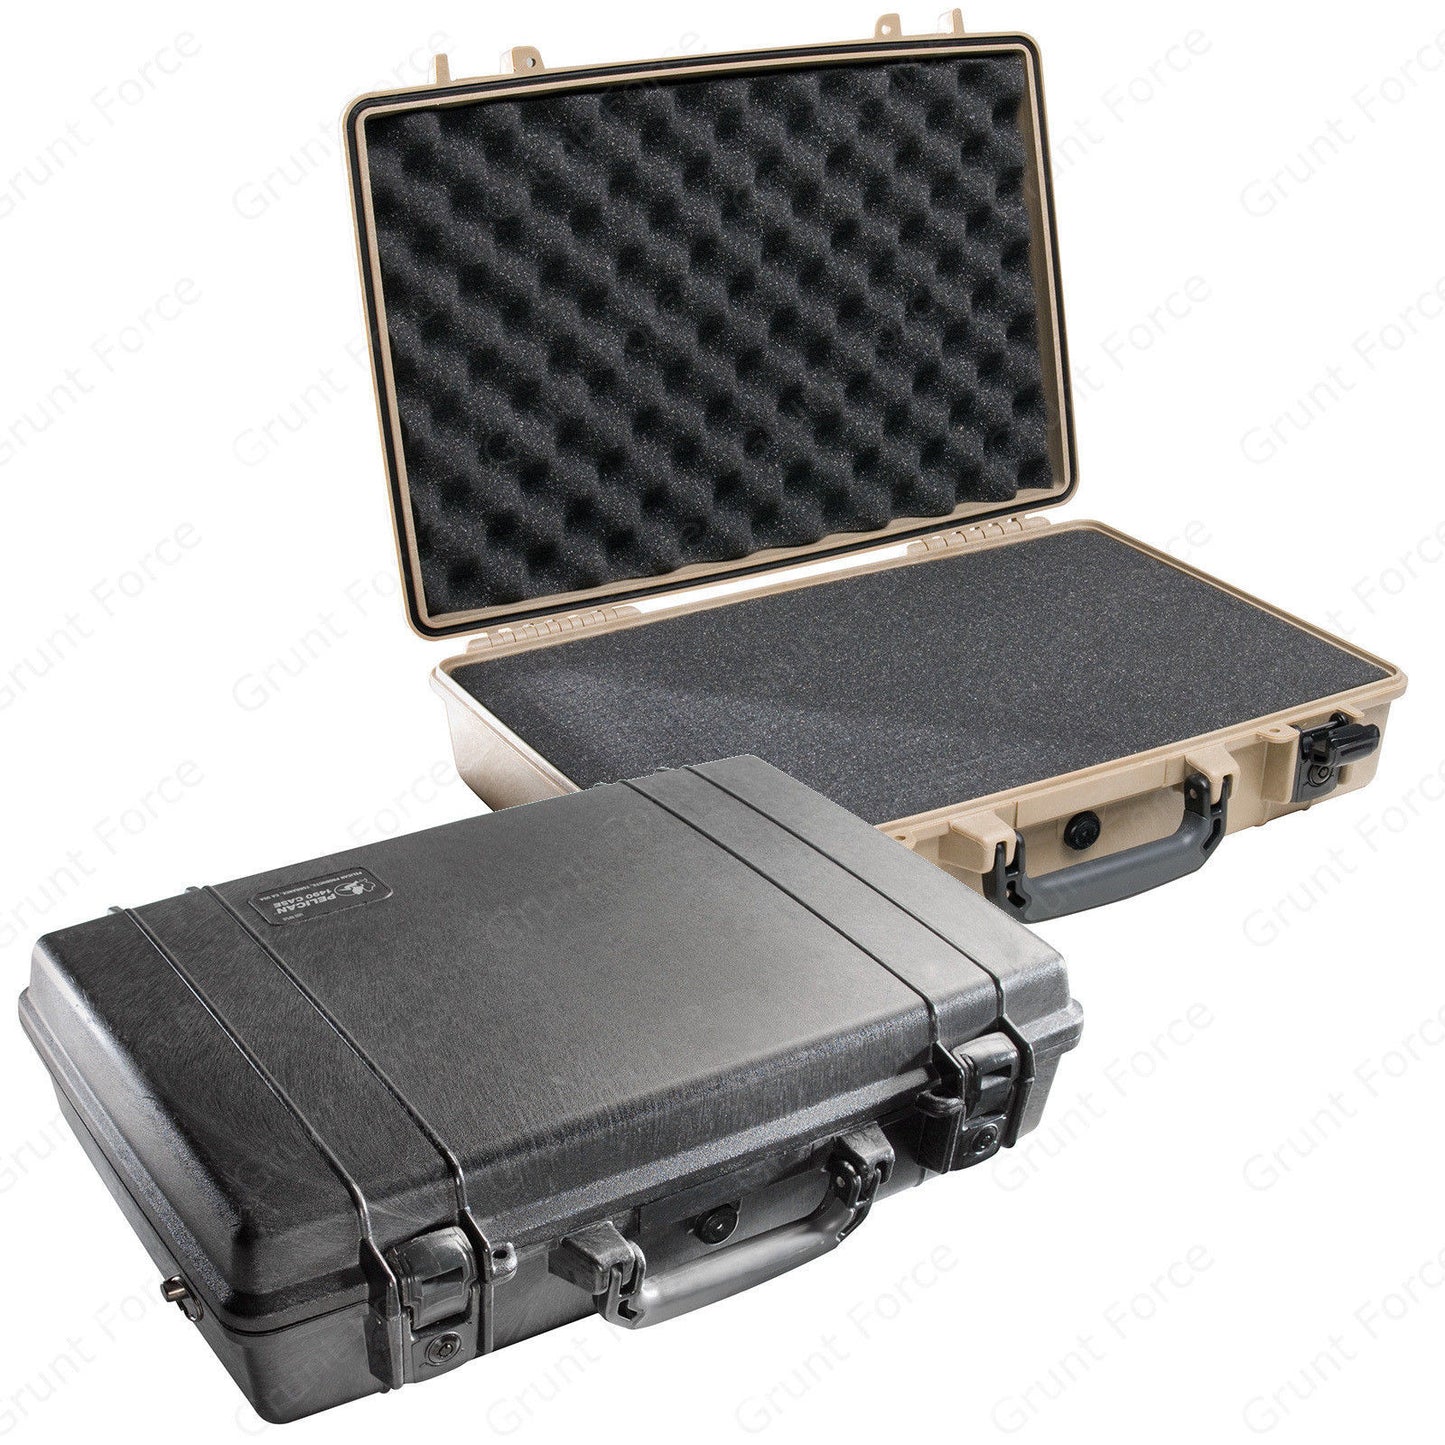 Pelican 1490 Protector Case - Attache Computer Laptop Case with Foam Insert